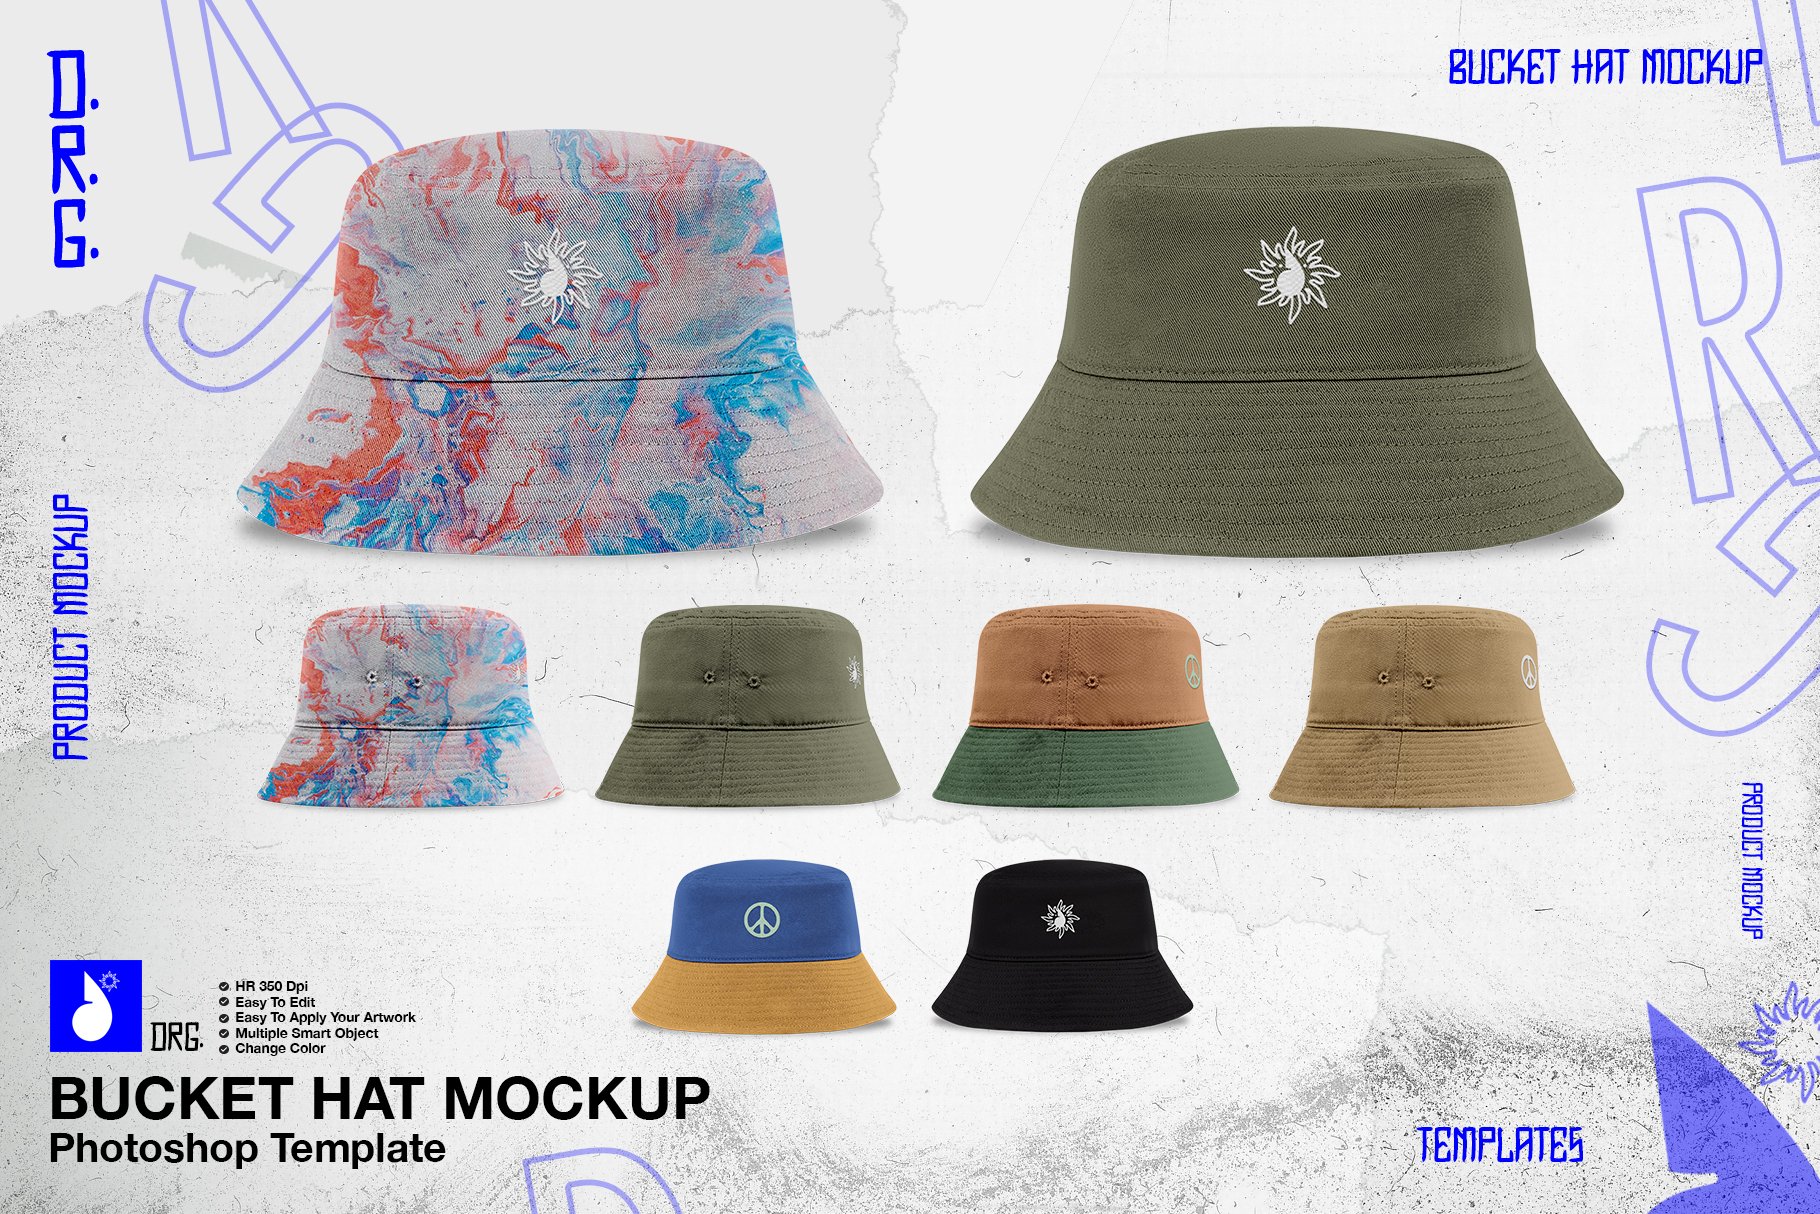 Bucket Hat Mockup cover image.